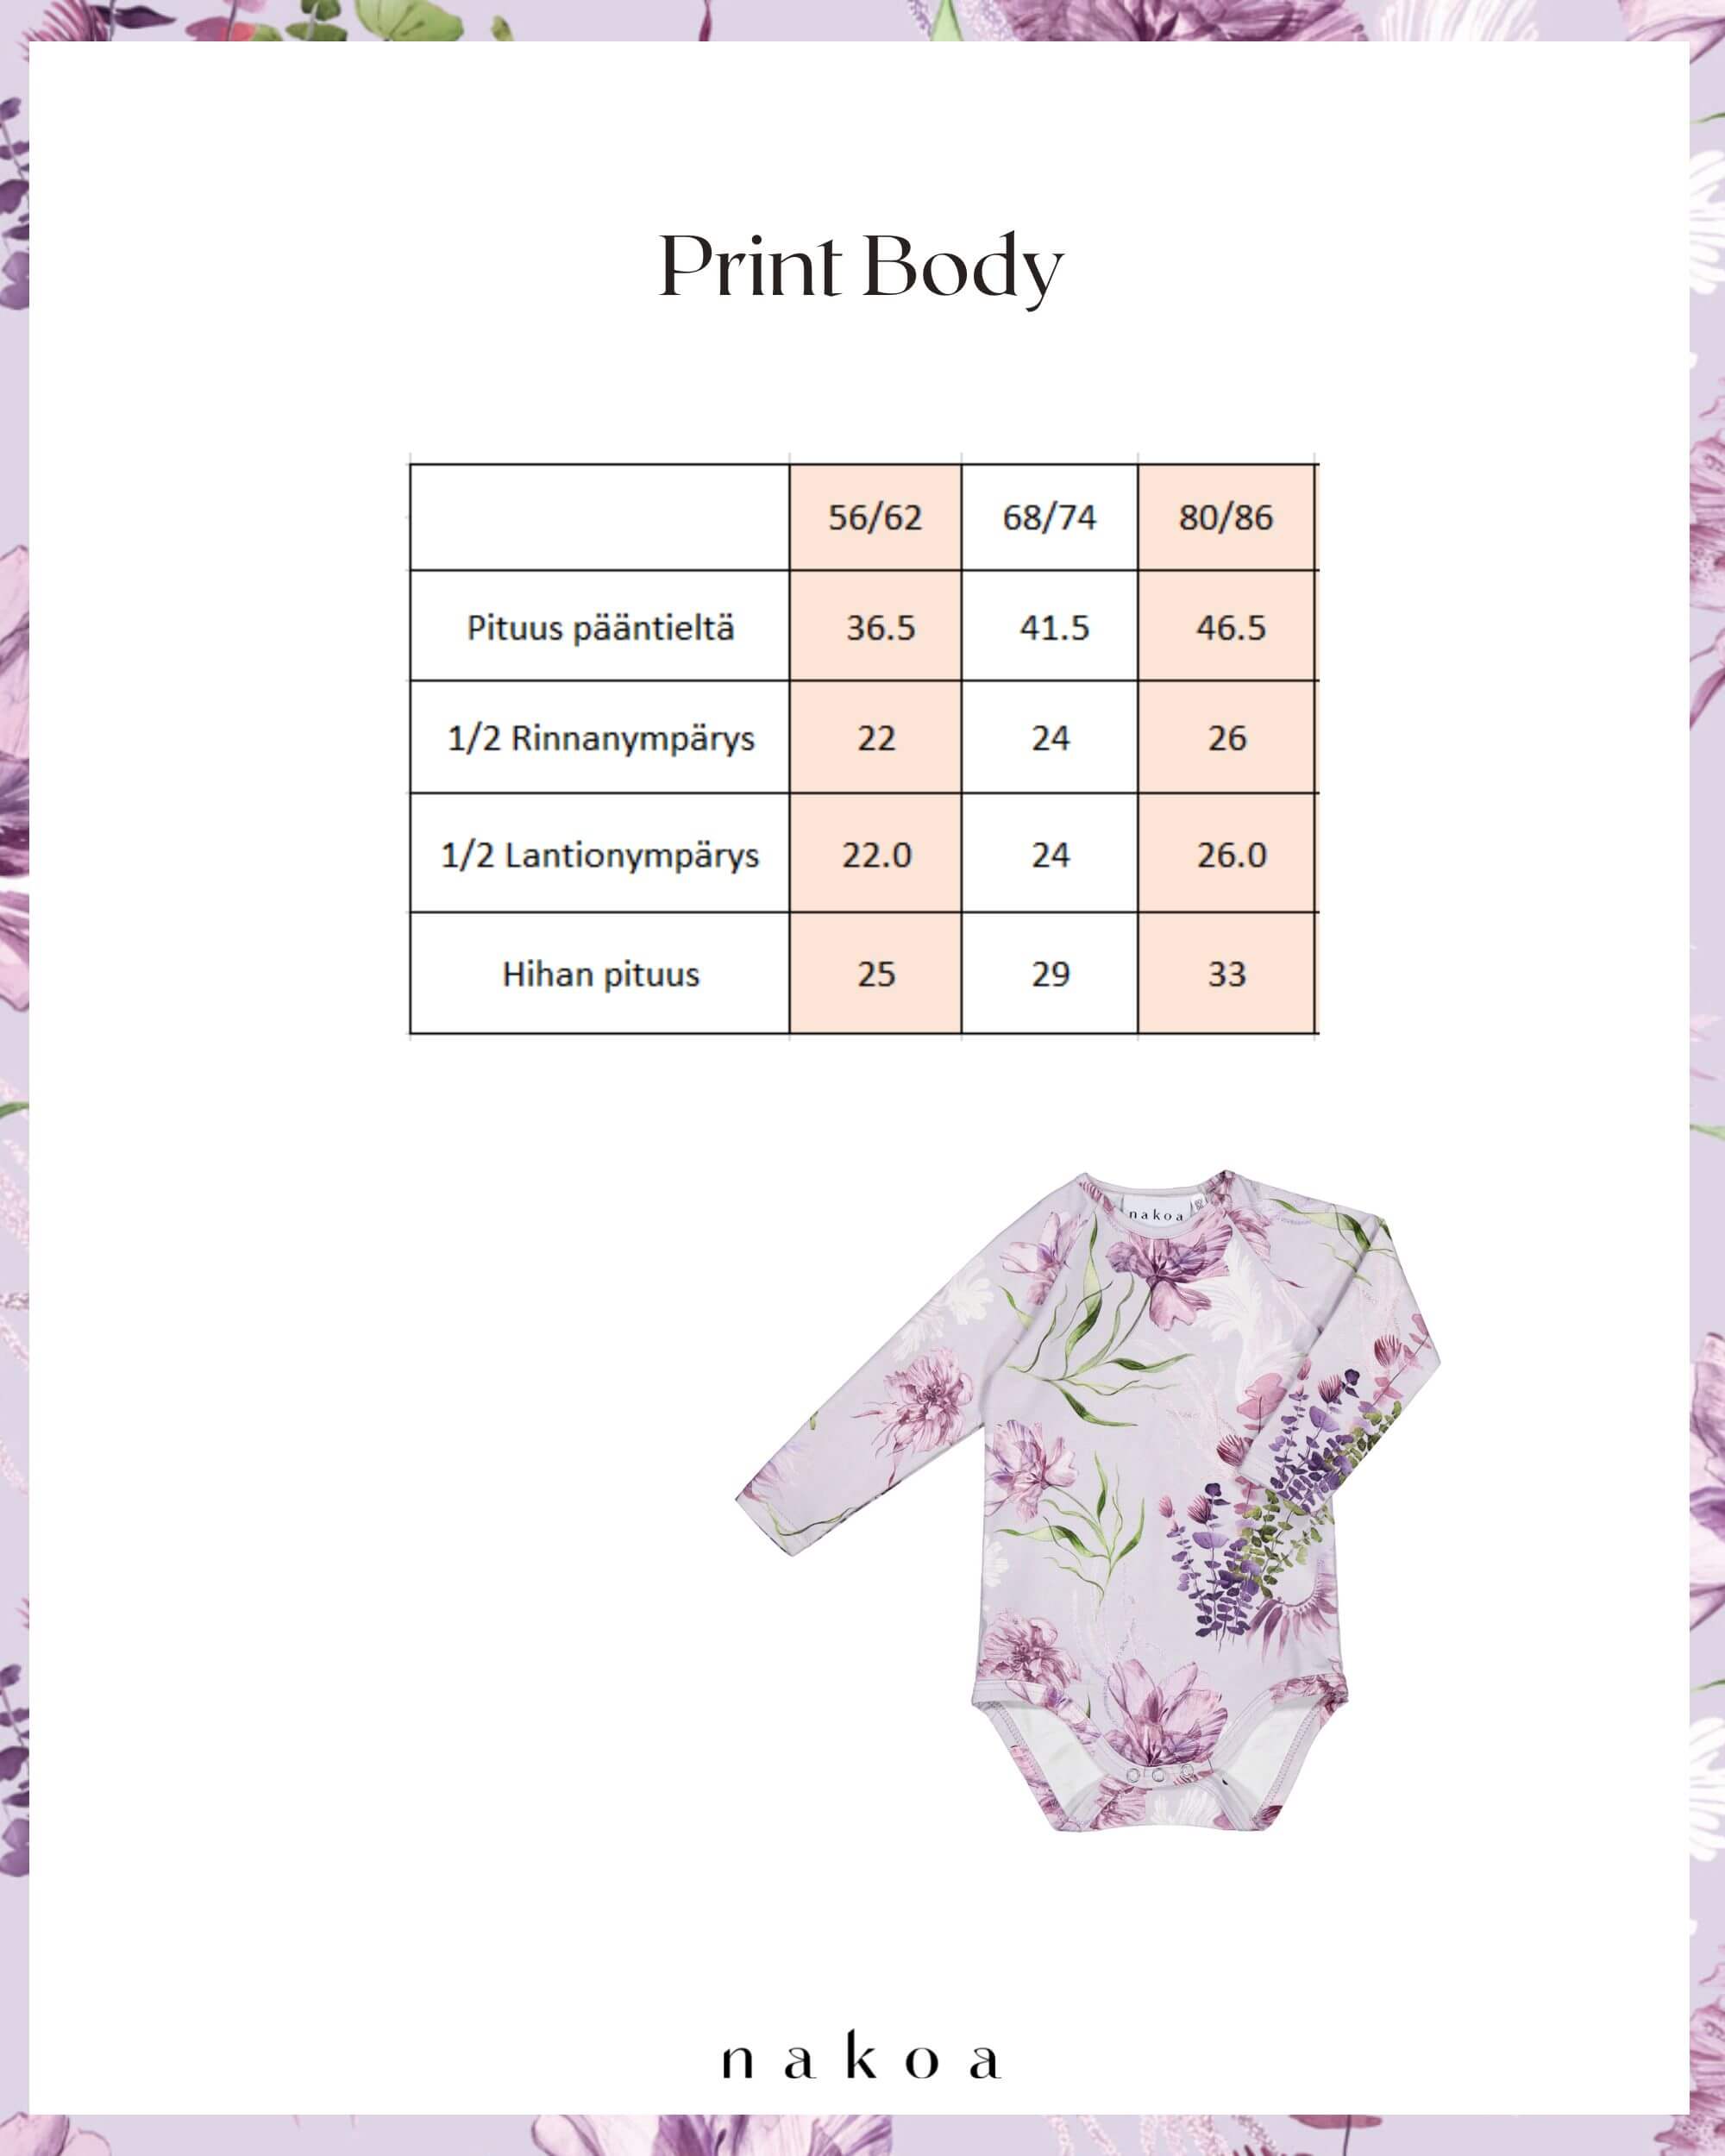 Print Body, Oceania